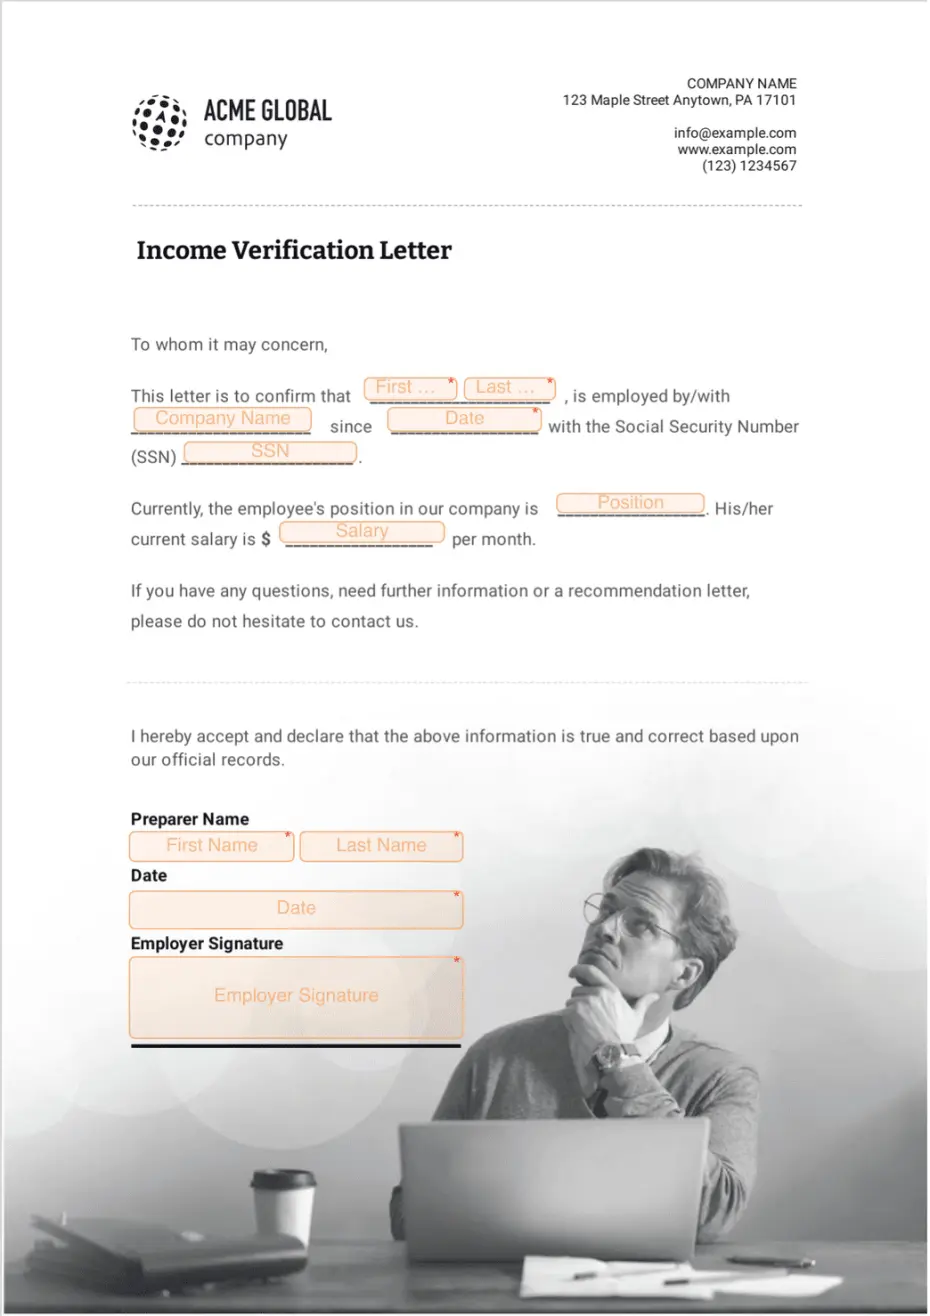 Income Verification Letter Template